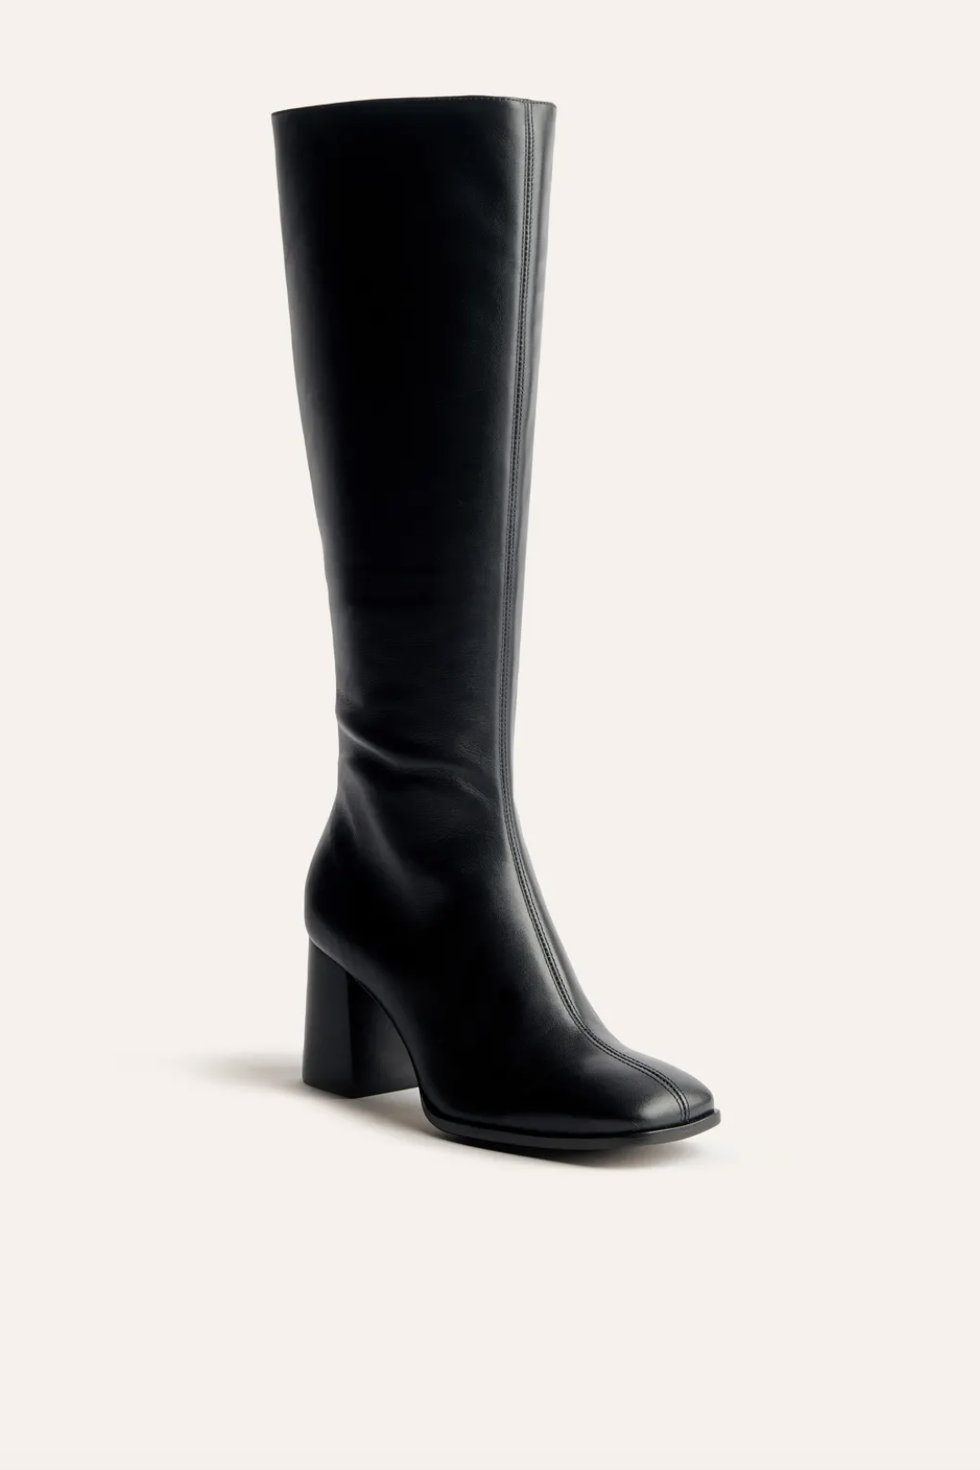 Louis Vuitton Fall 2011 44 shoe  Heeled rain boots, Leather thigh high  boots, Knee high platform boots